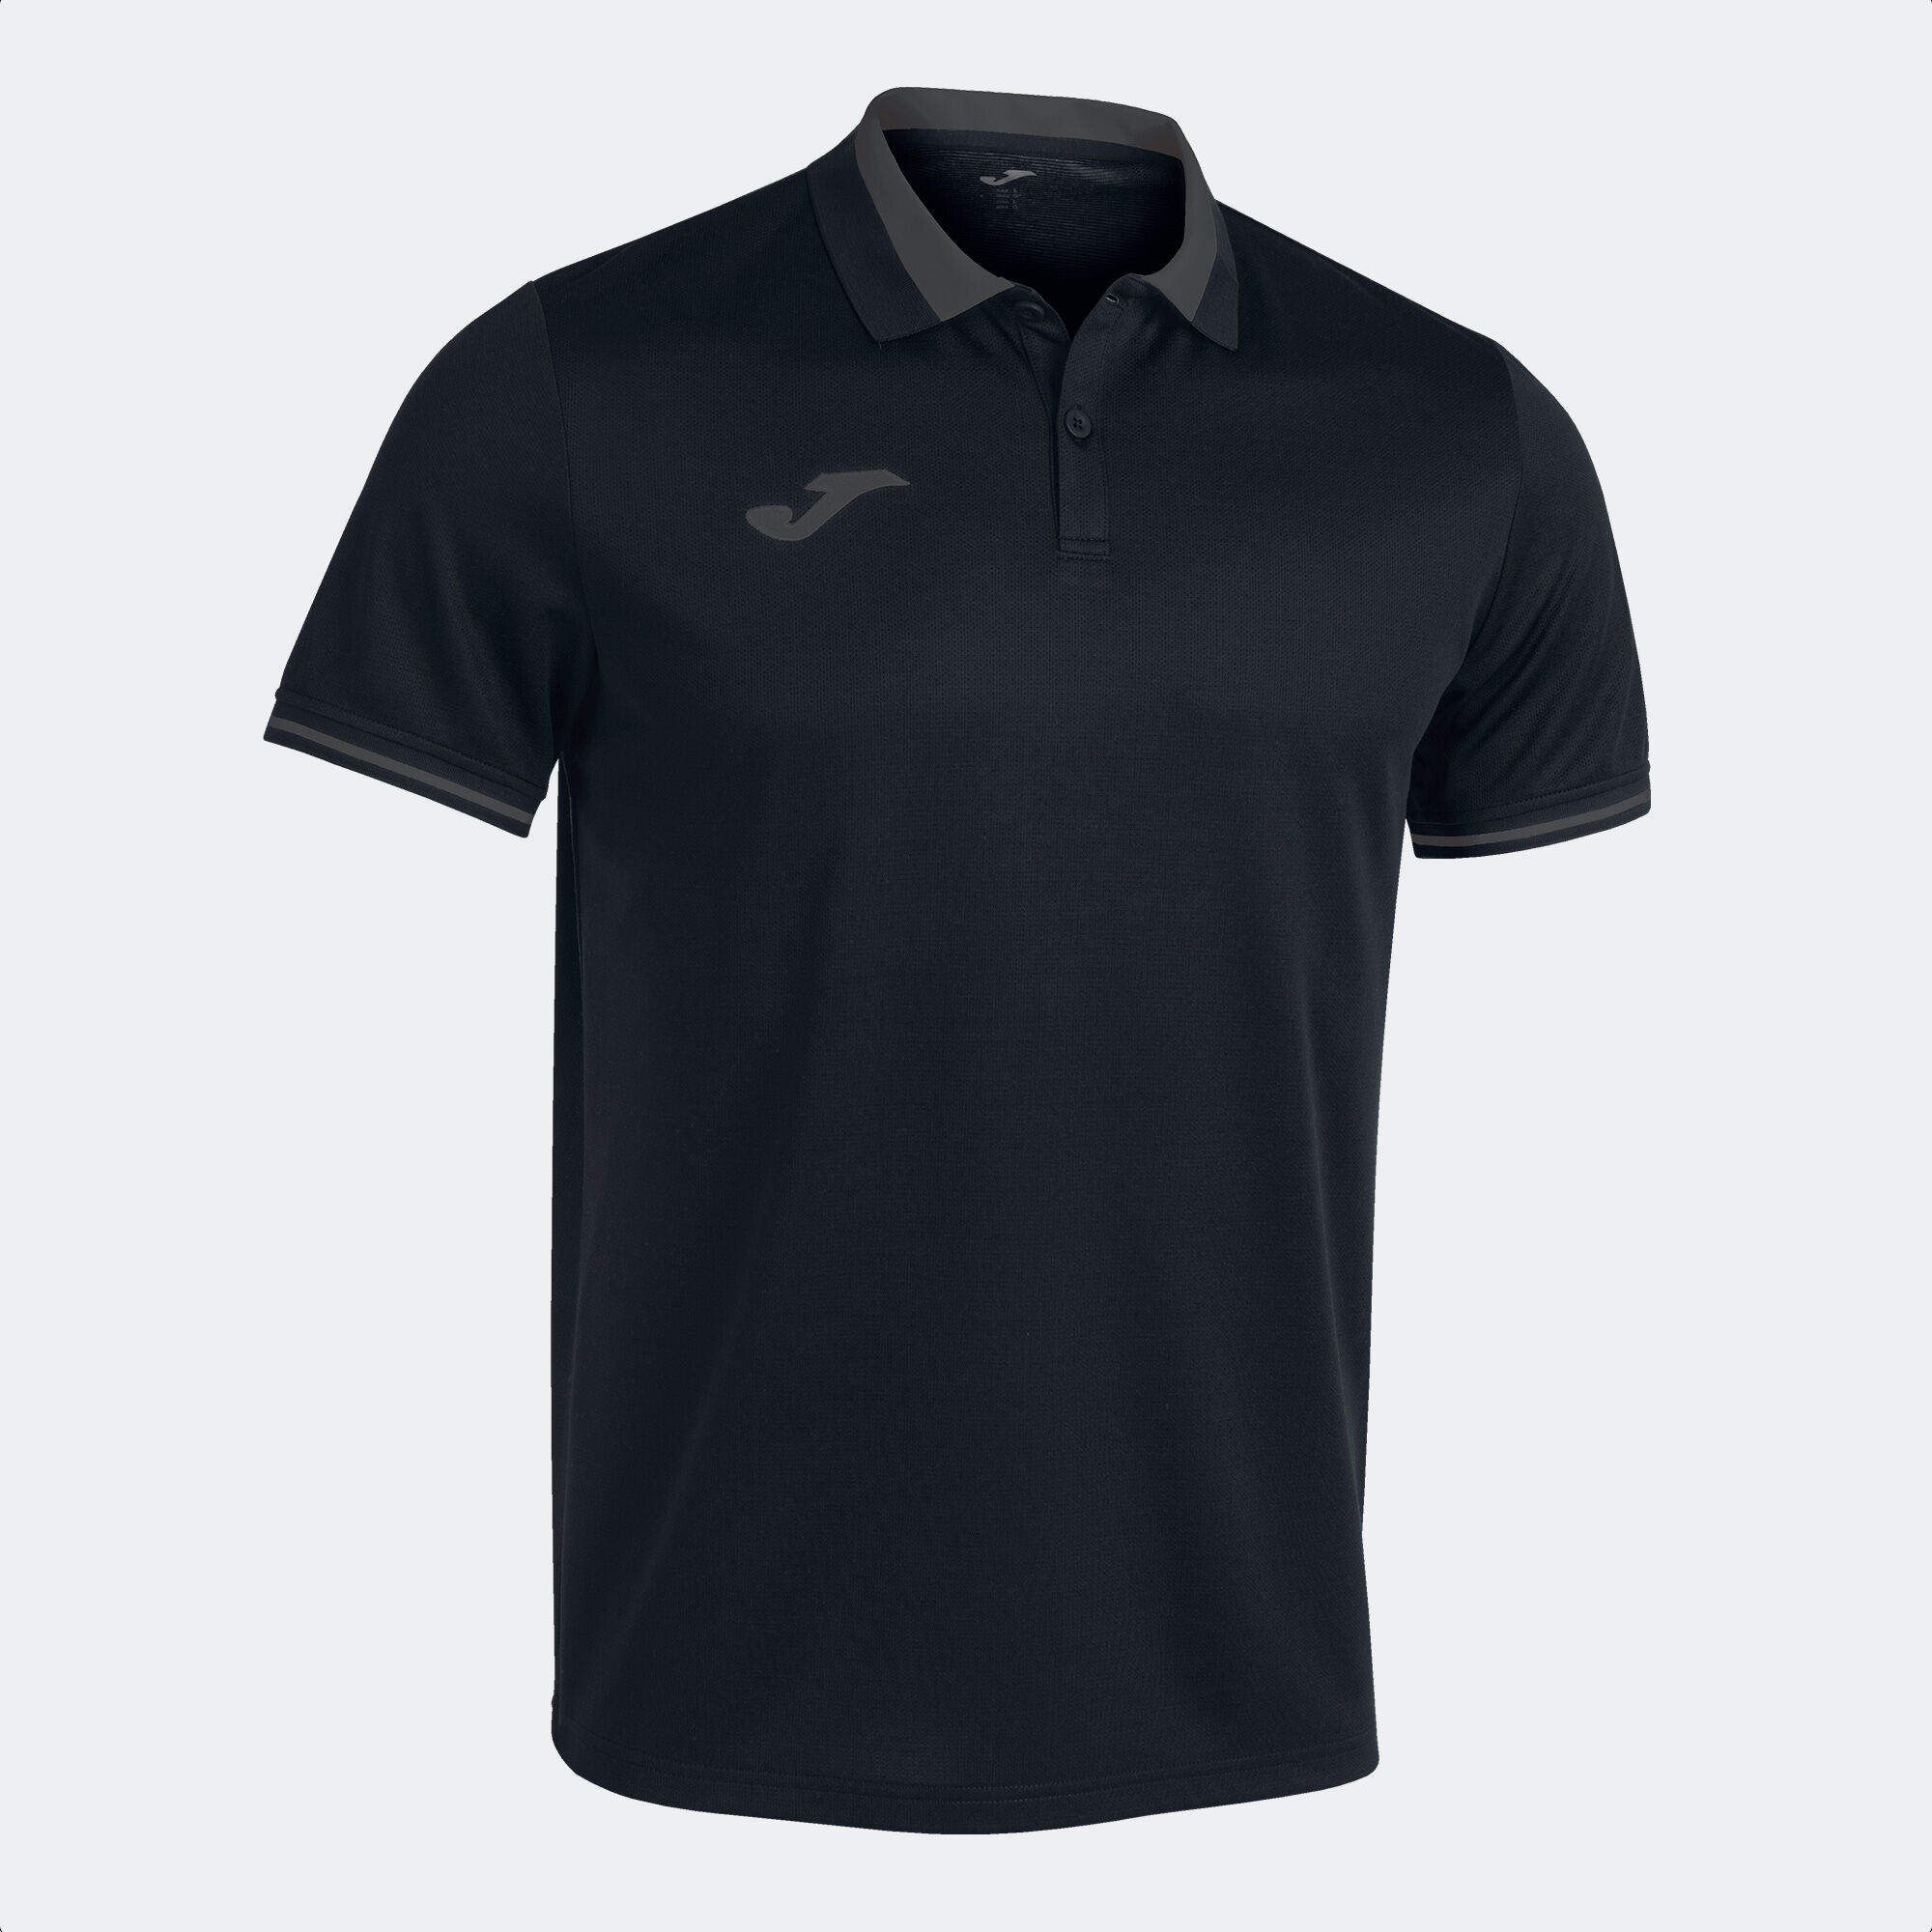 Polo shirt short-sleeve man Championship VI black dark gray